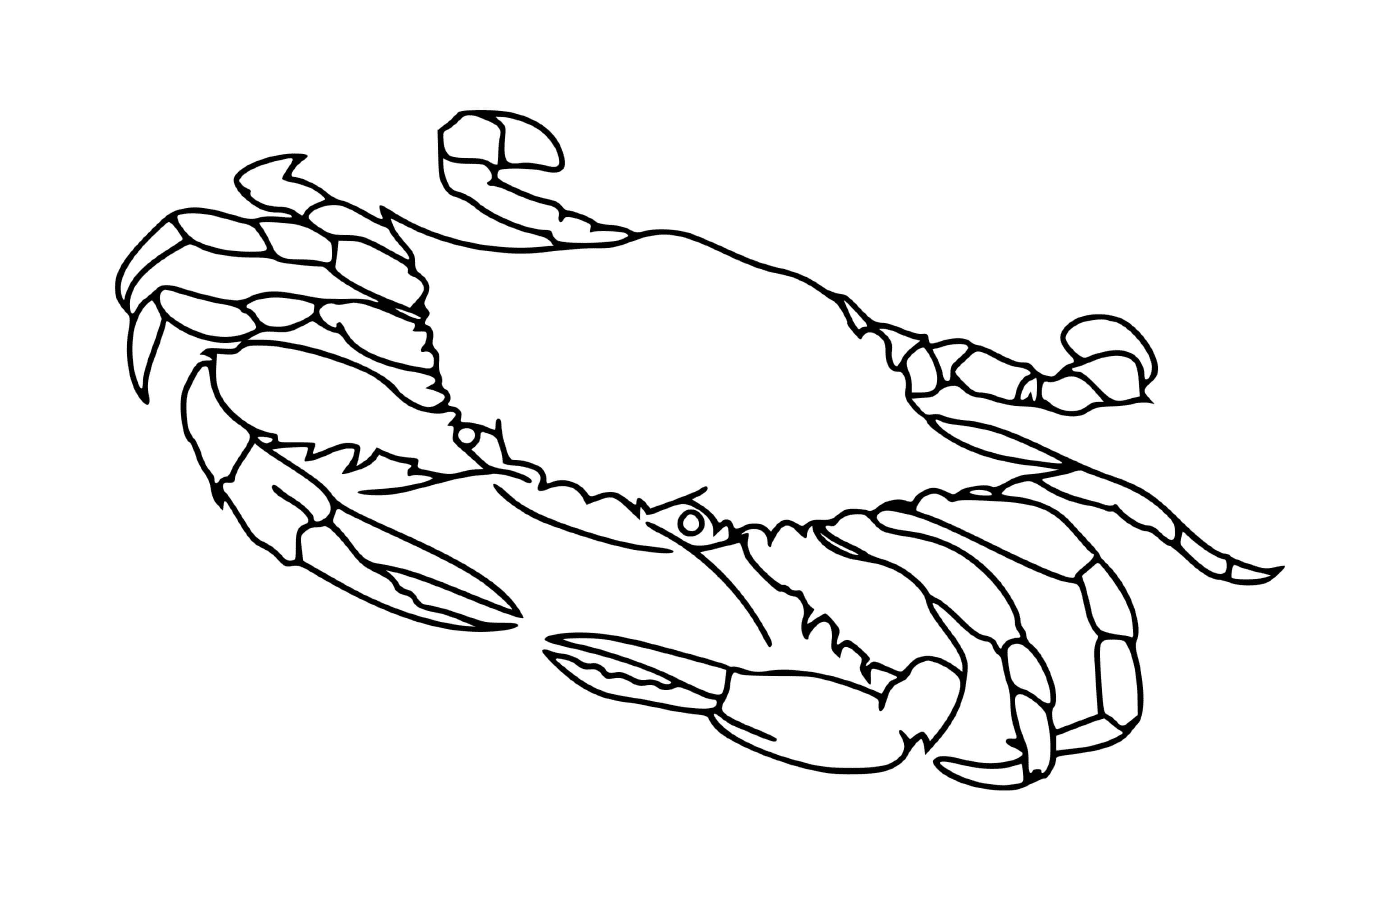   Un crabe animal marin 